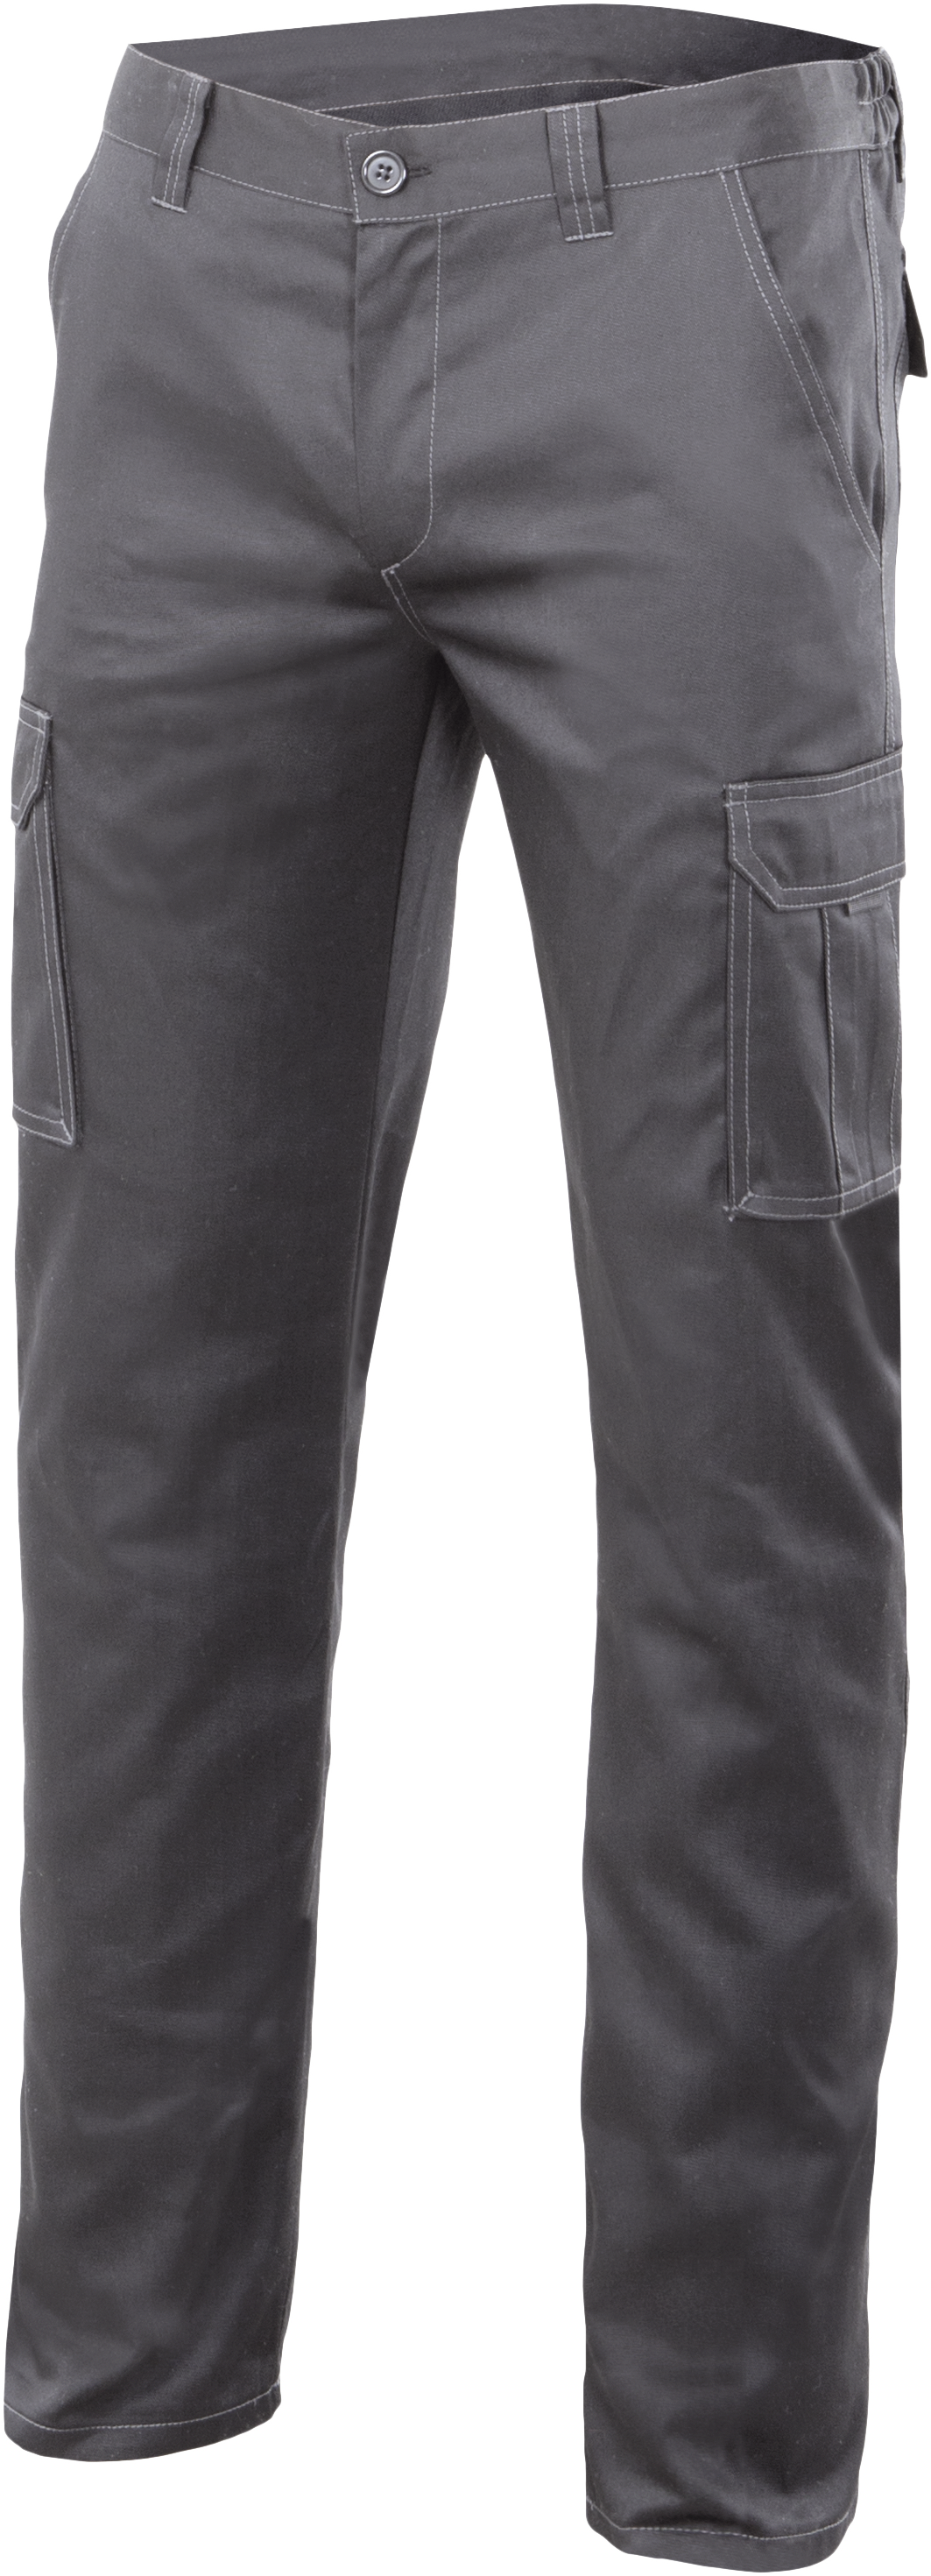 Teoría básica Acurrucarse fusible Pantalon gris 103002S TM | Leroy Merlin